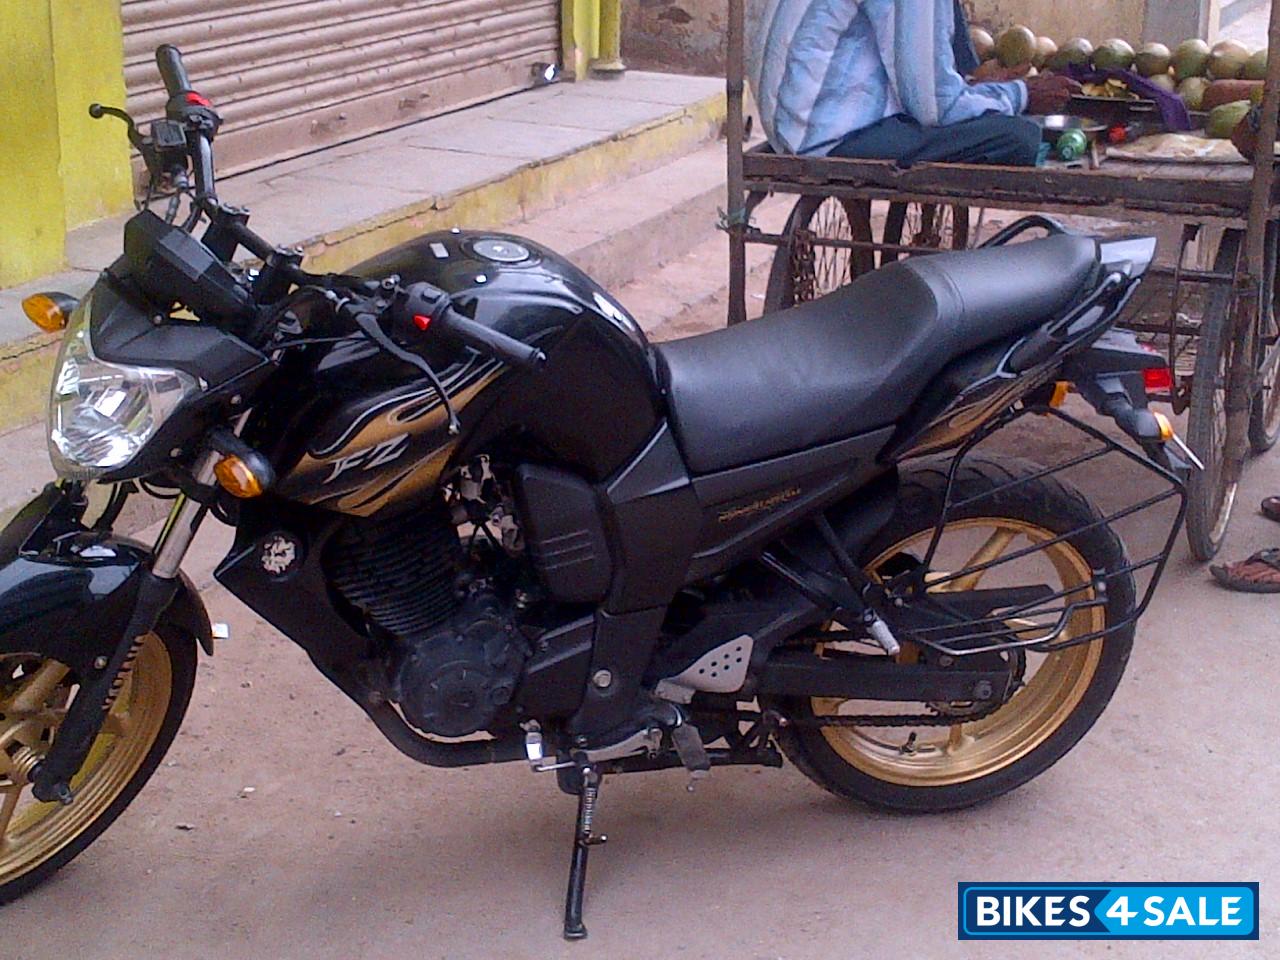 Yamaha FZ16 Picture 2. Bike ID 82230. Bike located in Hyderabad ...